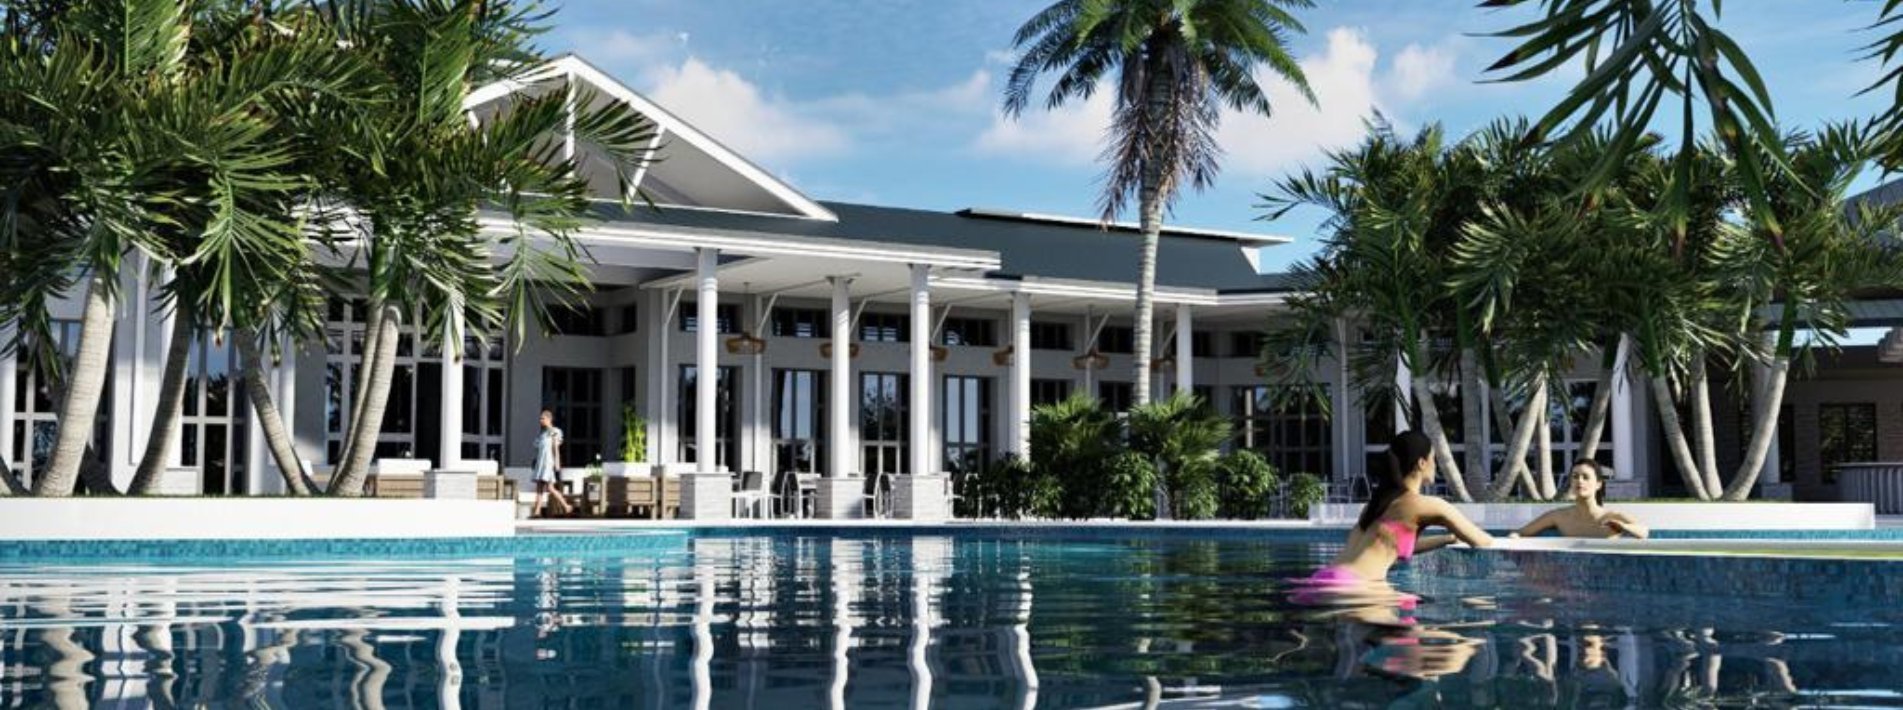 Windsor Cay Resort Resort-Style Pool